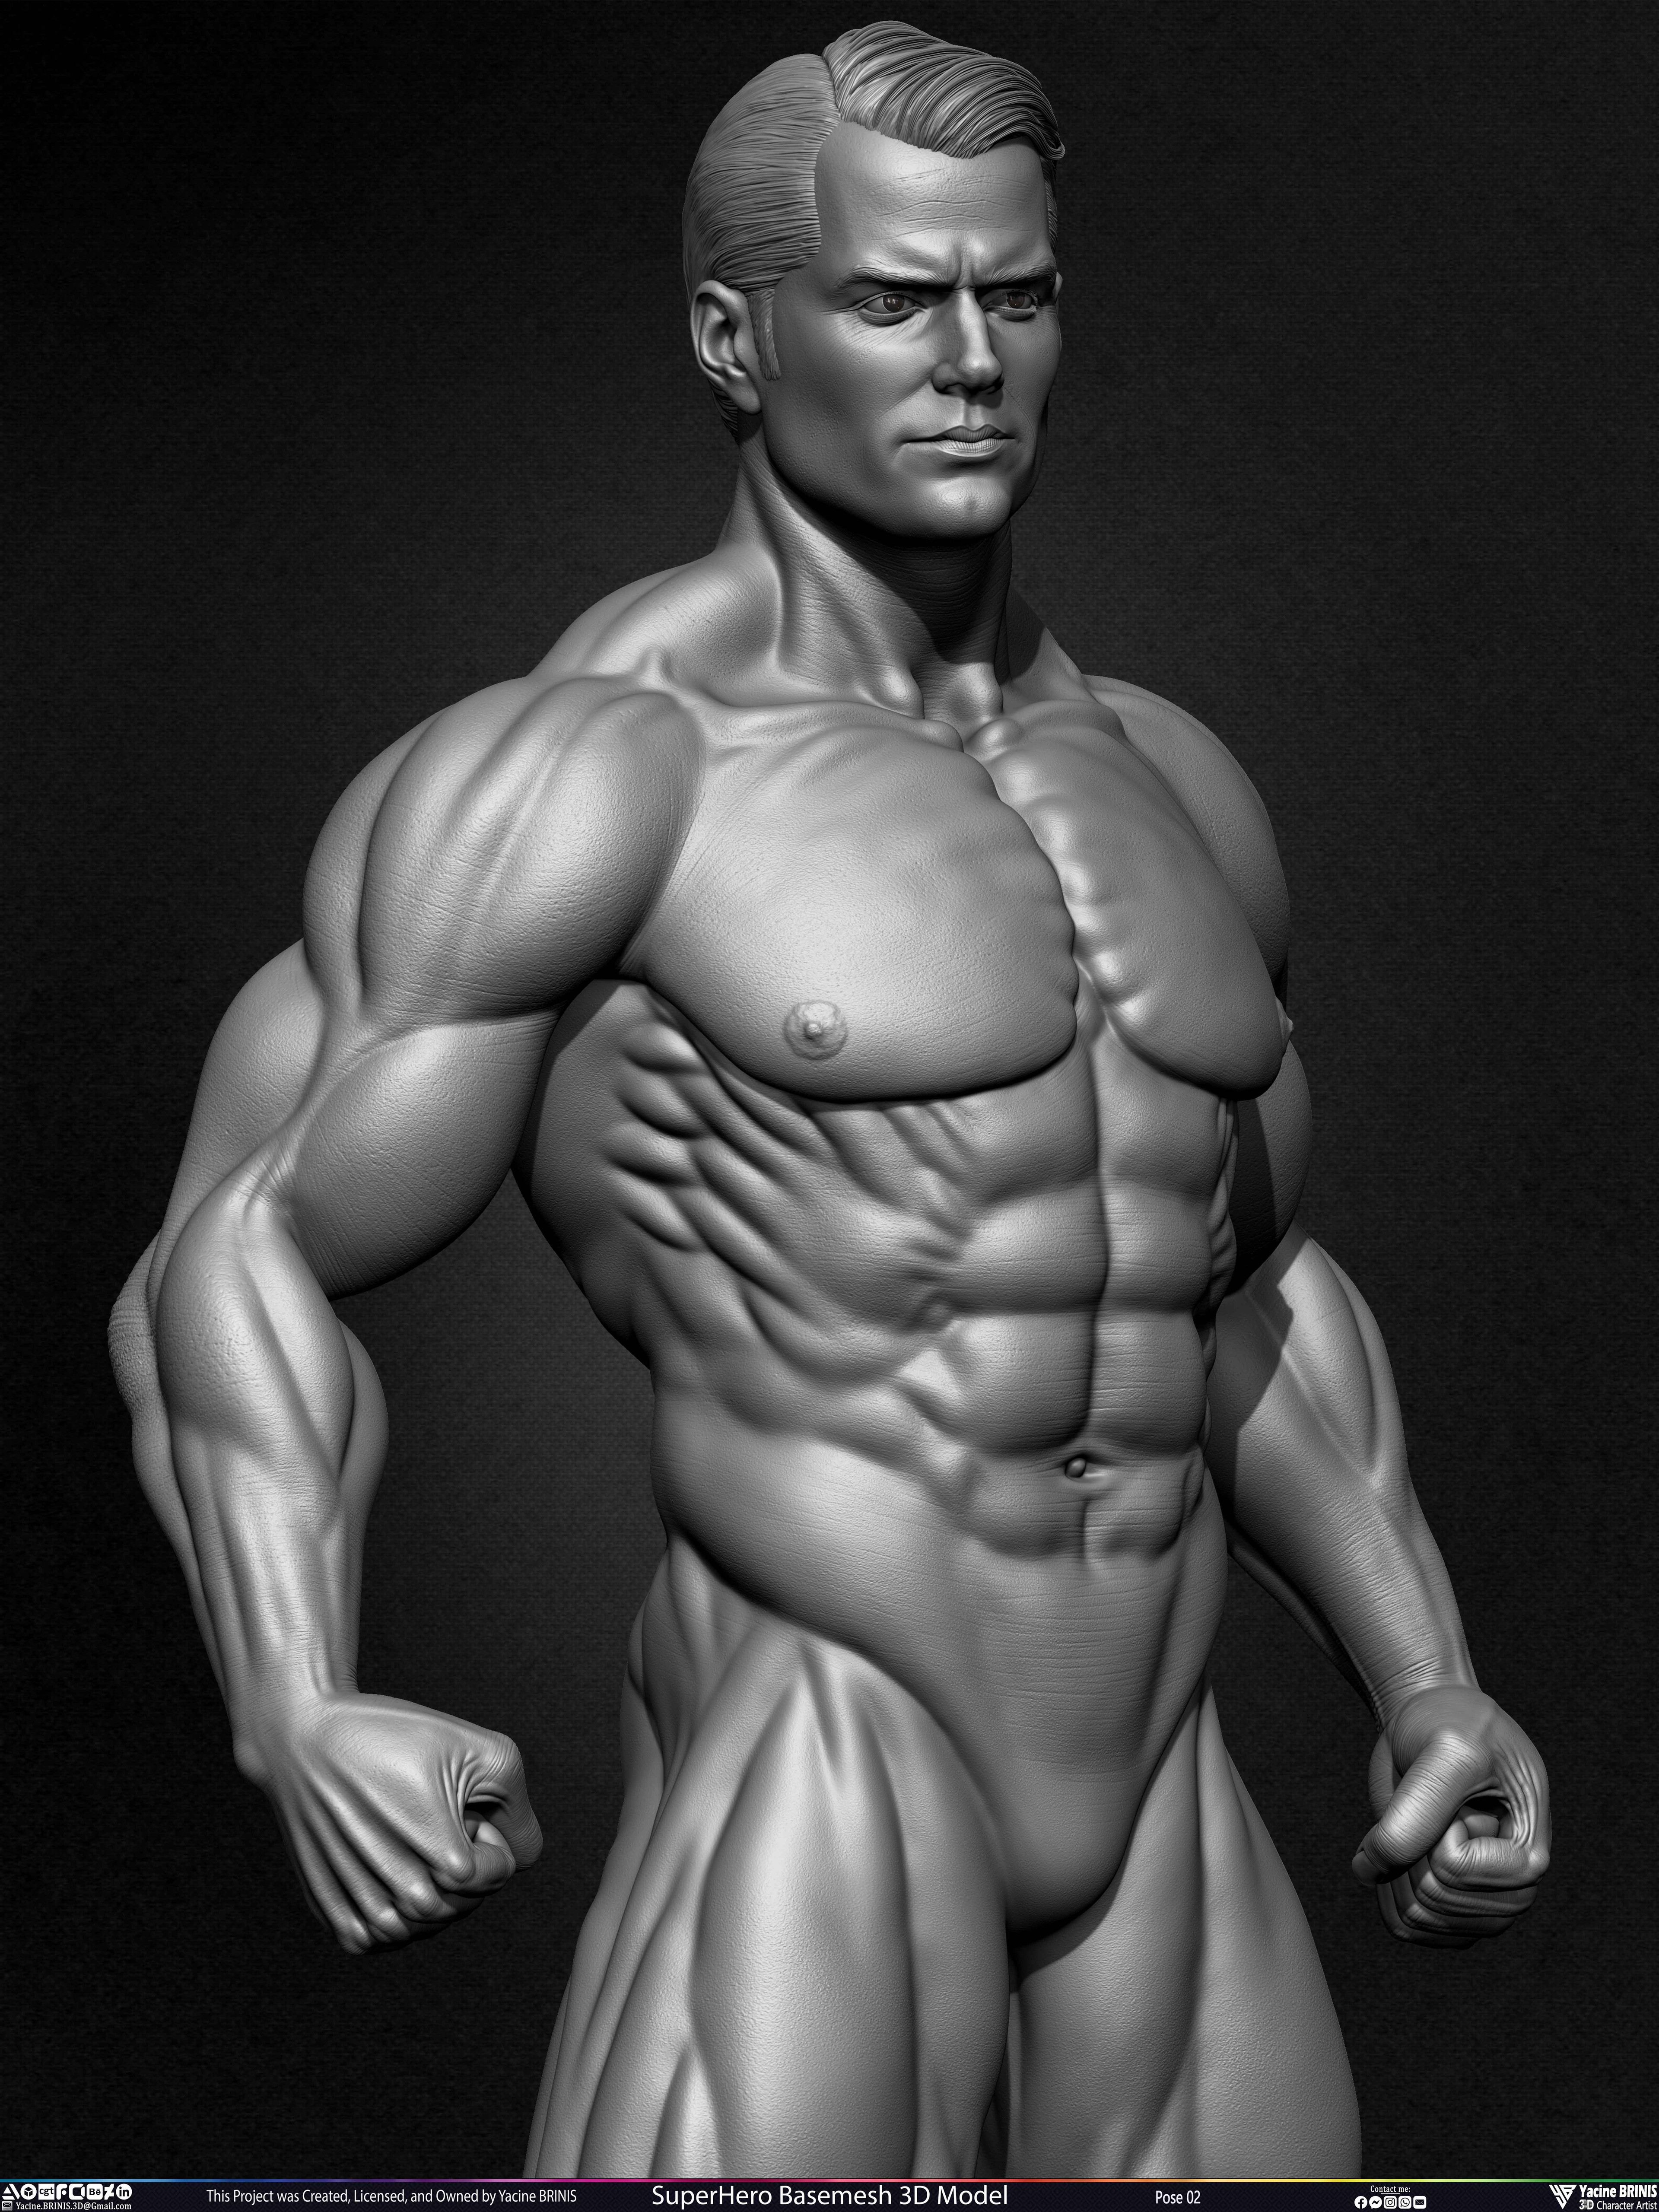 Super-Hero Basemesh 3D Model - Henry Cavill- Man of Steel - Superman - Pose 02 Sculpted by Yacine BRINIS Set 016